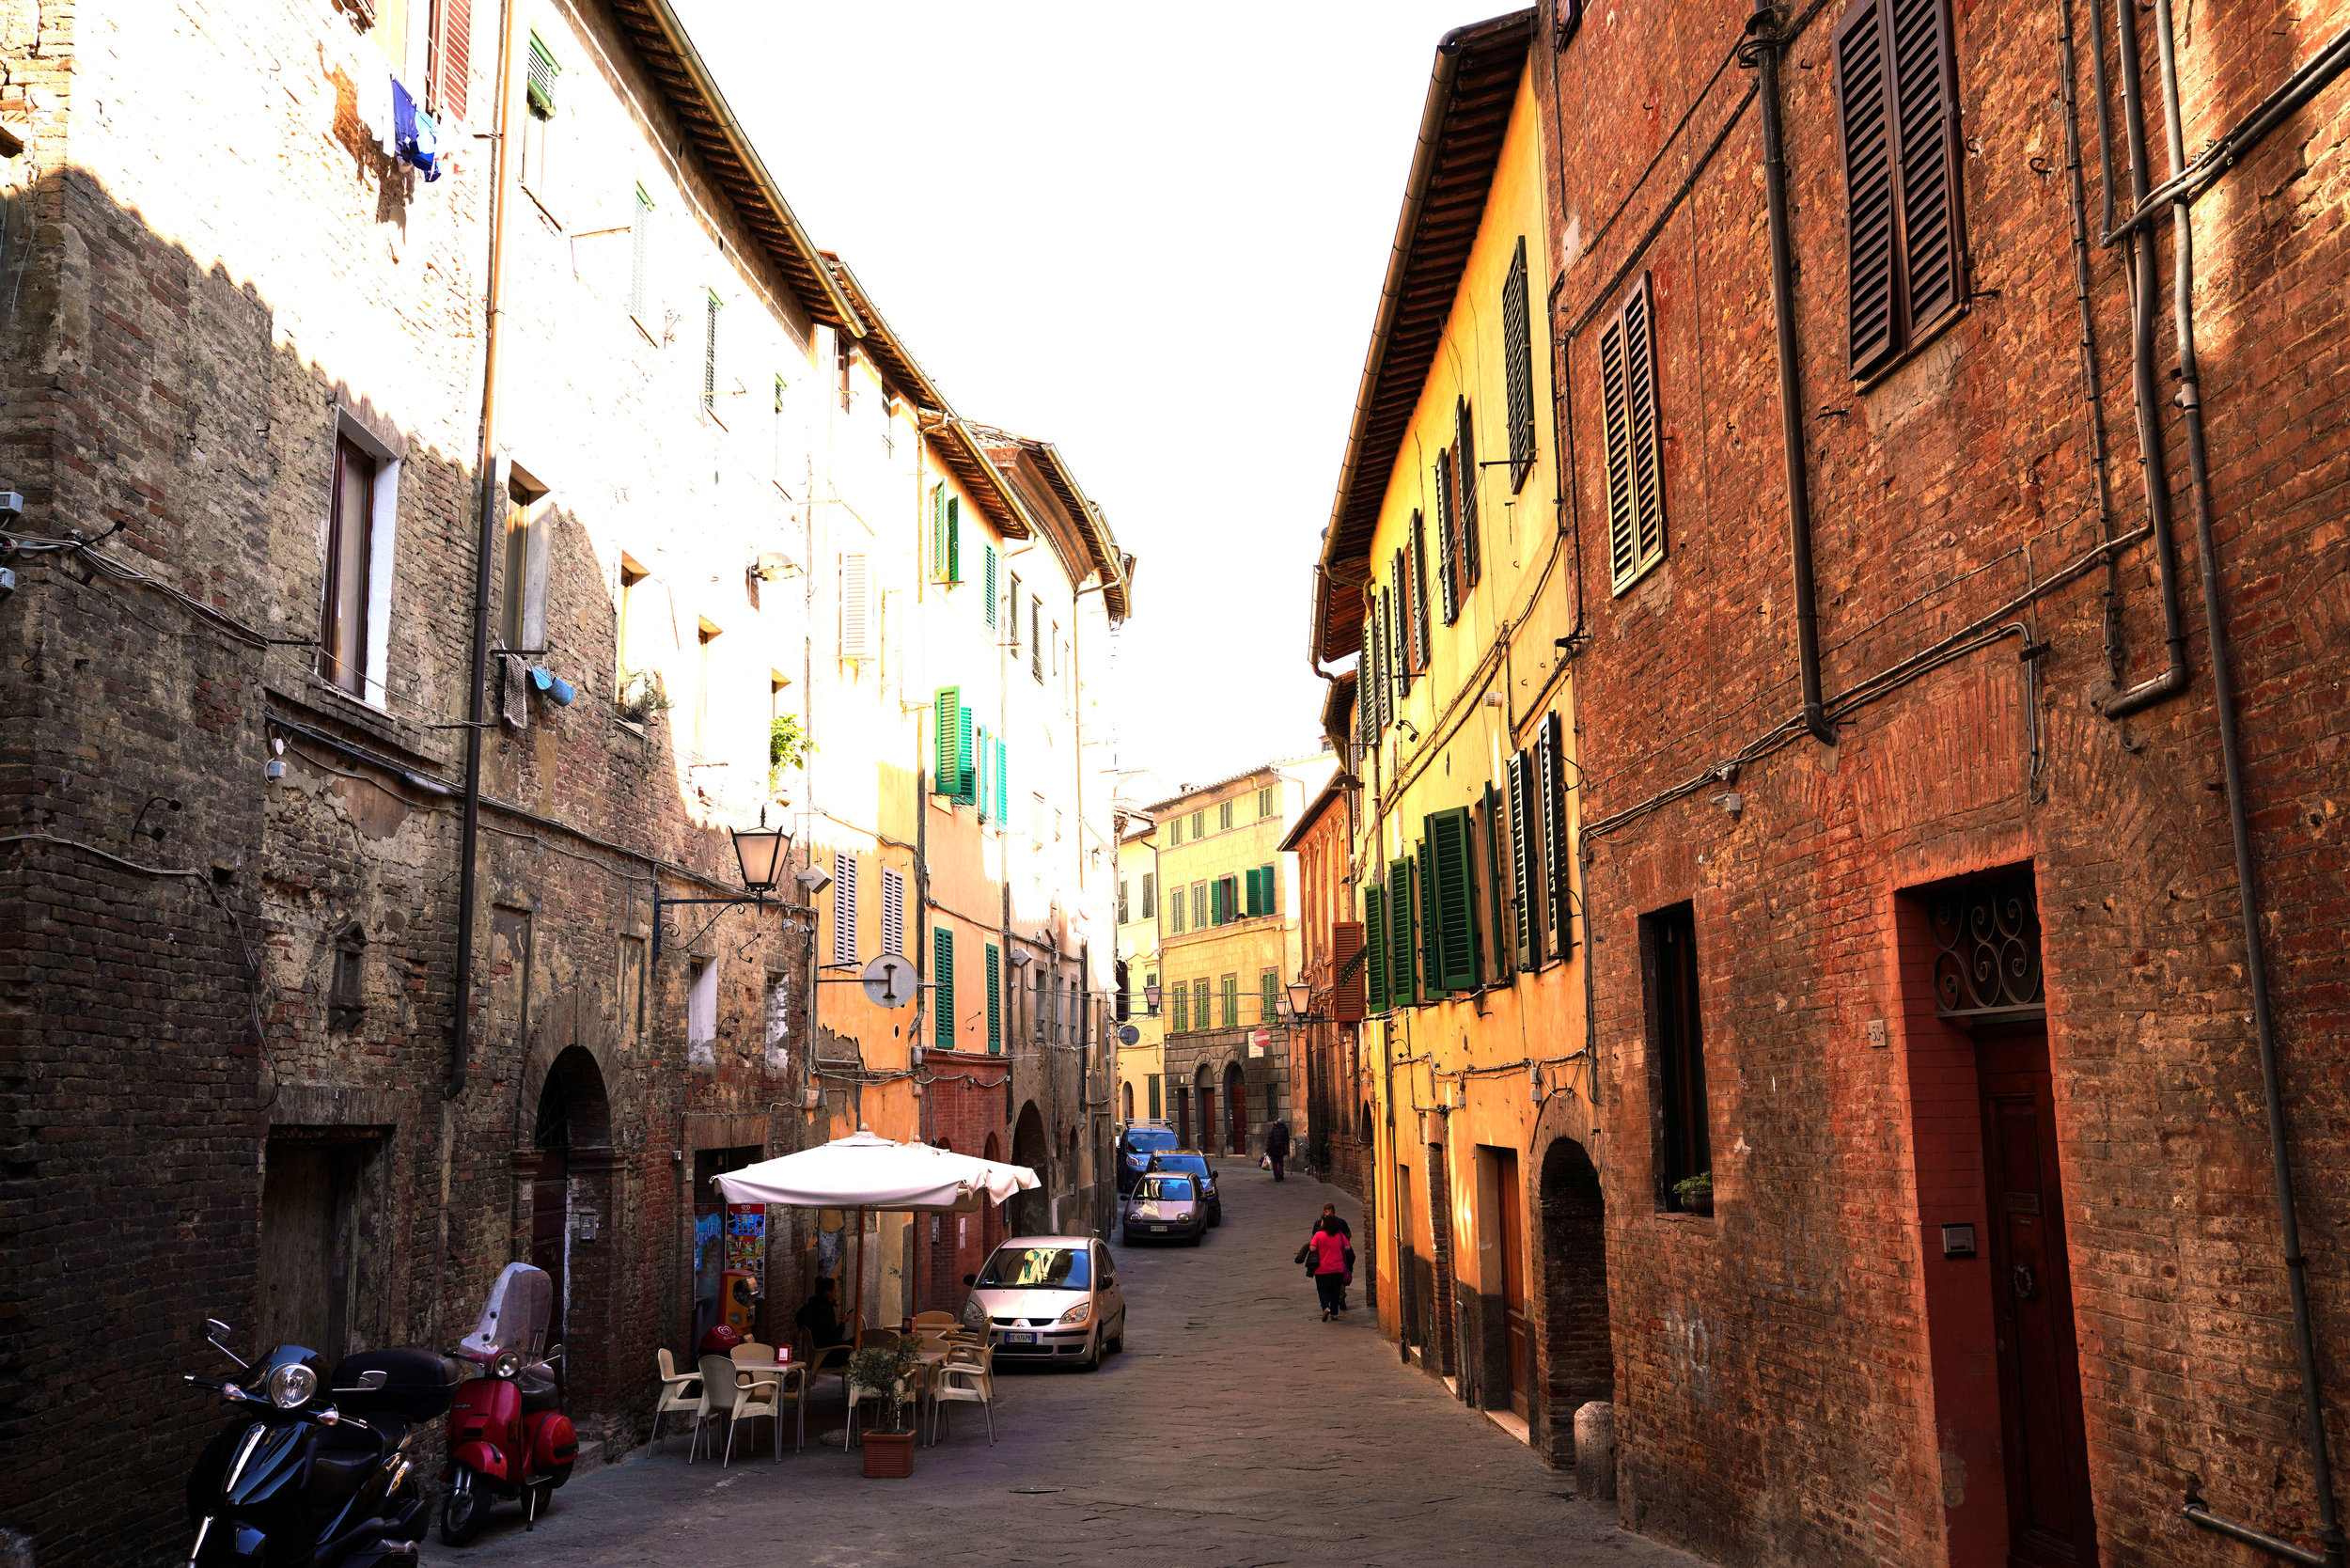  The narrow, steep streets of Siena. 